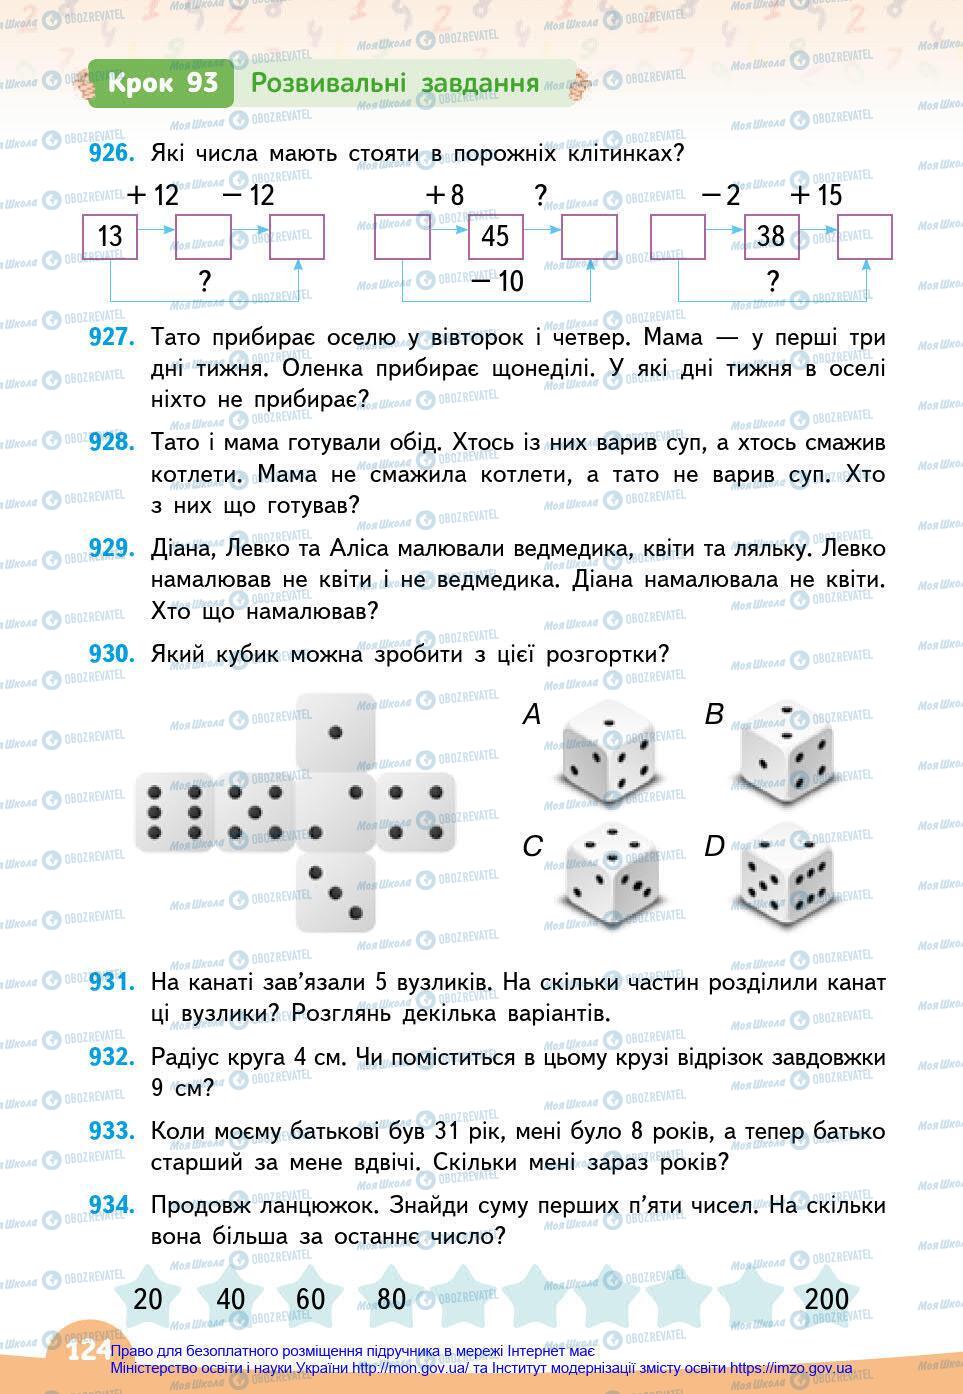 Учебники Математика 3 класс страница 124